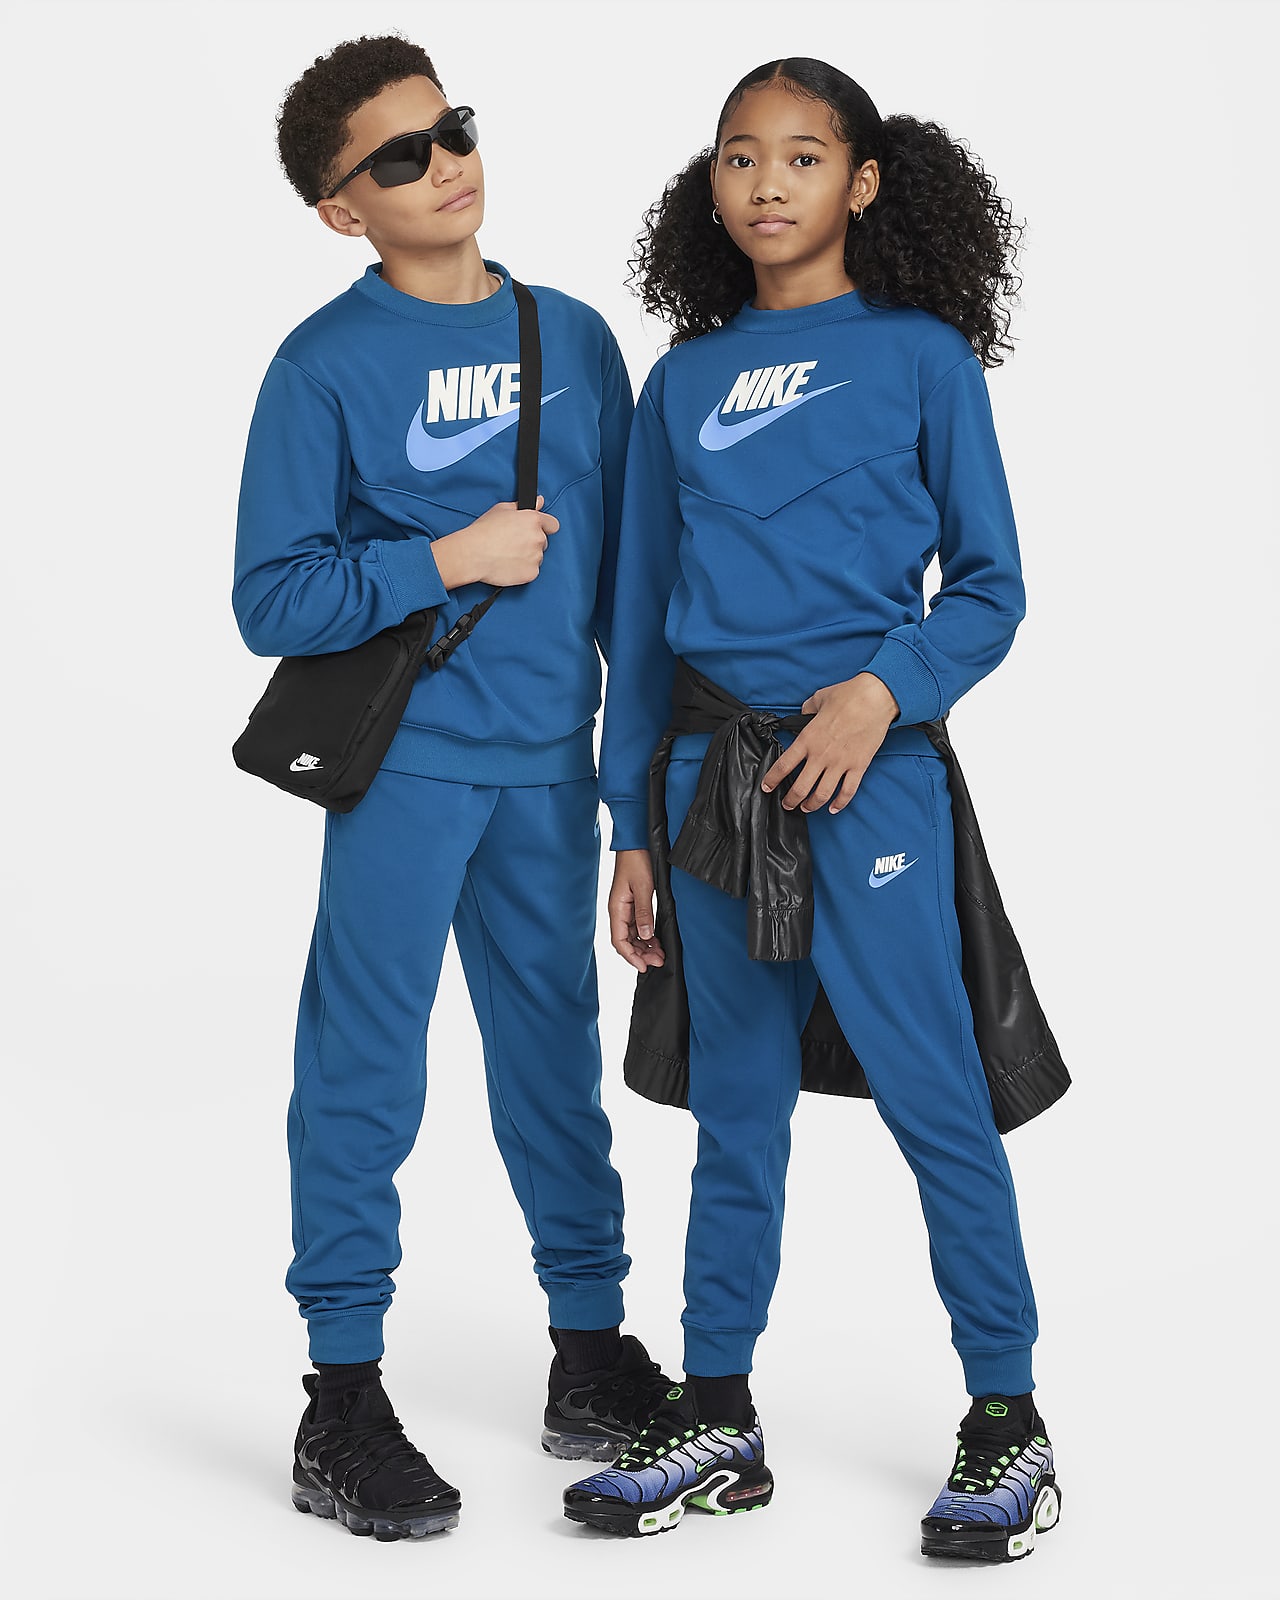 Girls Nike Tracksuits, Girls Activewear Sets